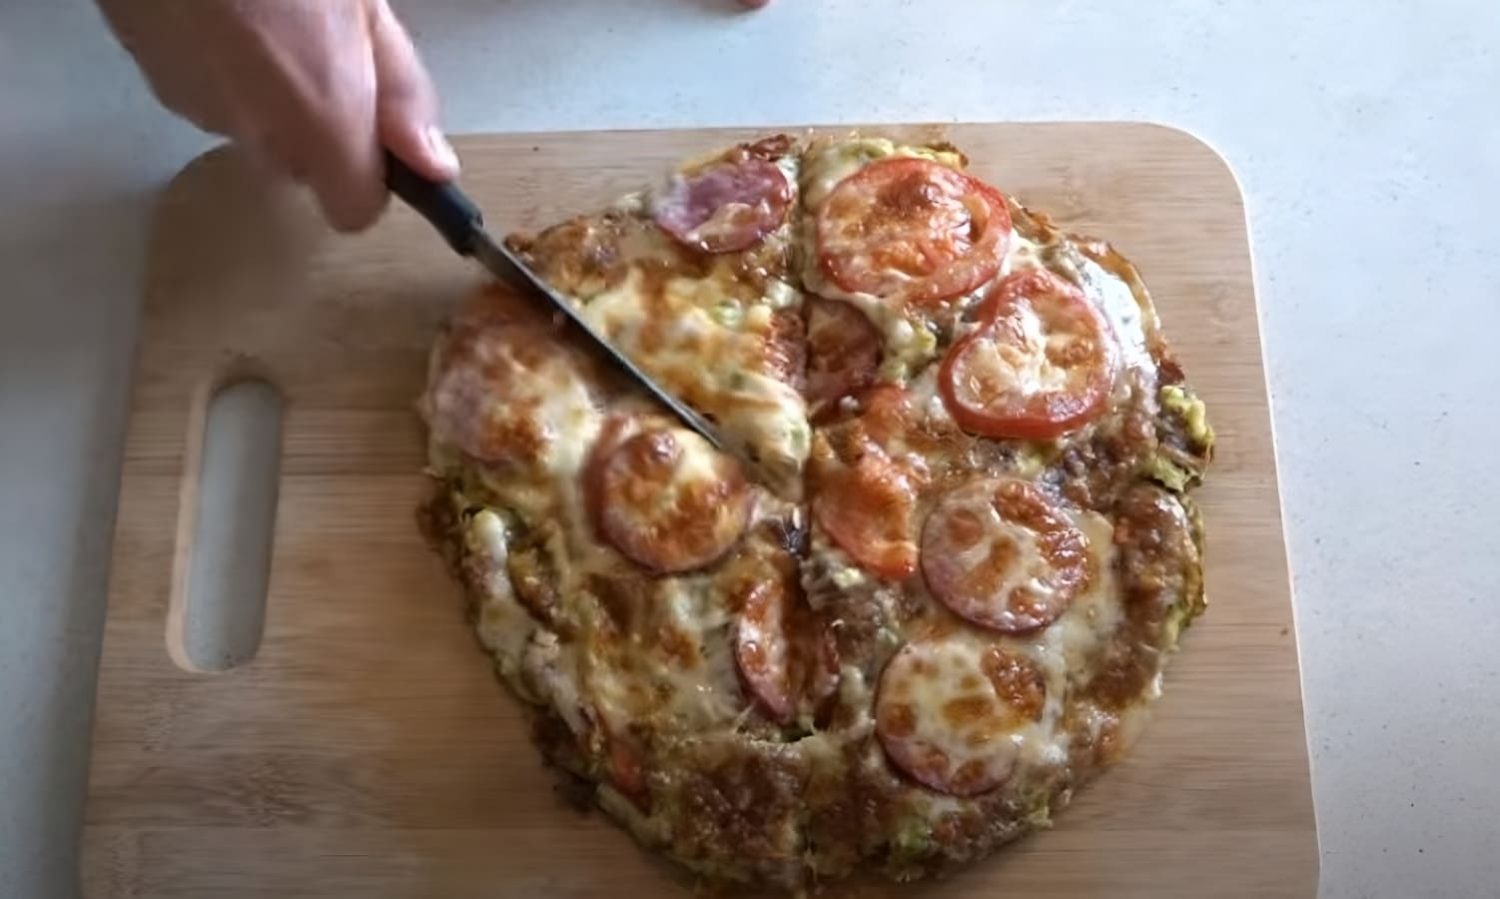 Unusual pizza - skillet casserole